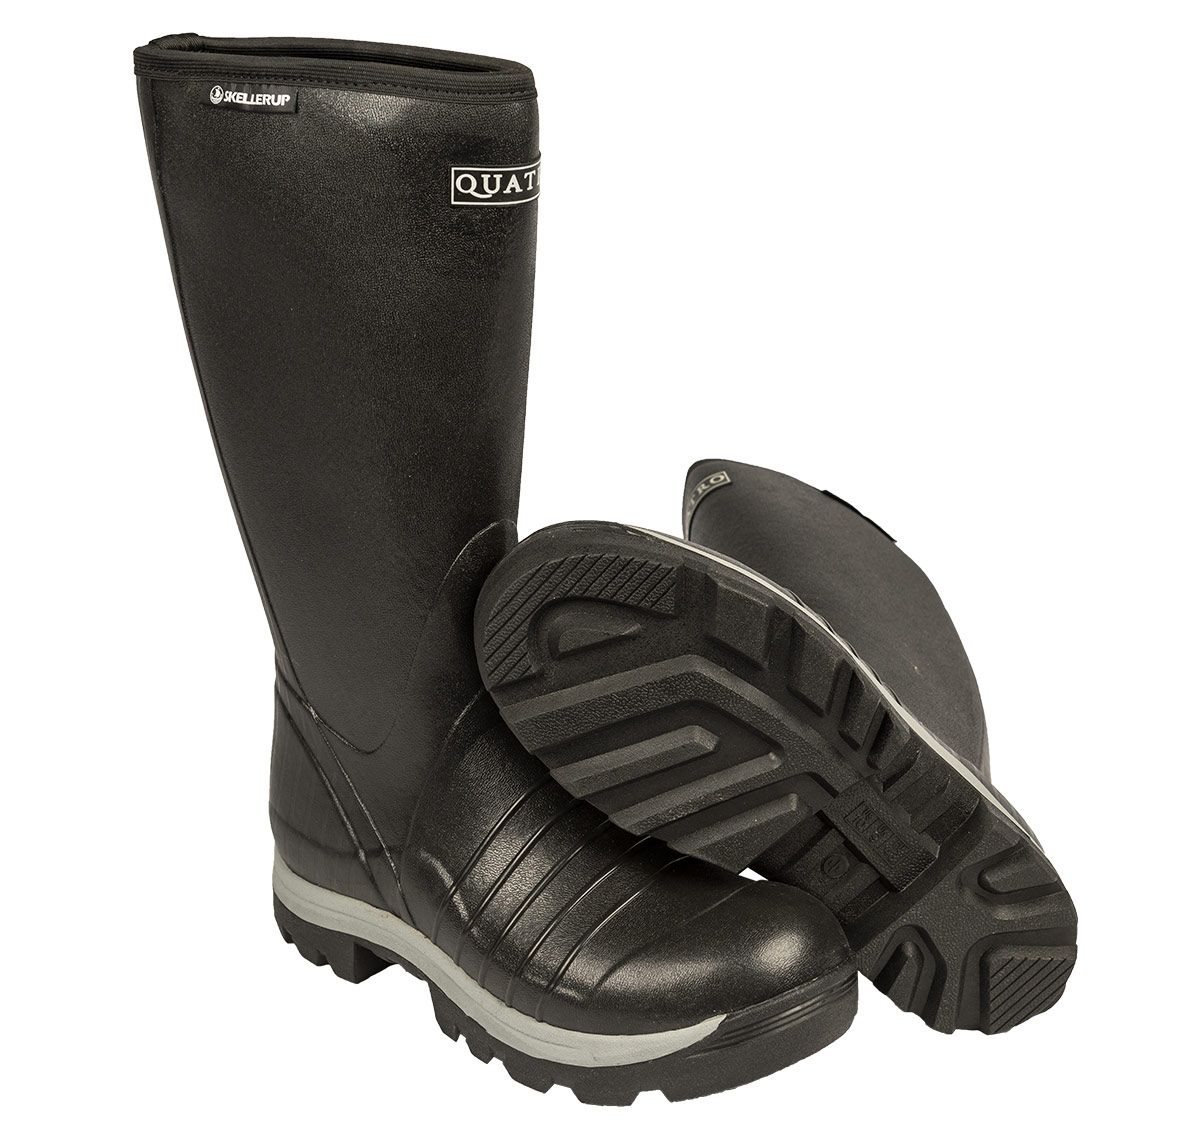 Quatro Non-Insulated Black Boot